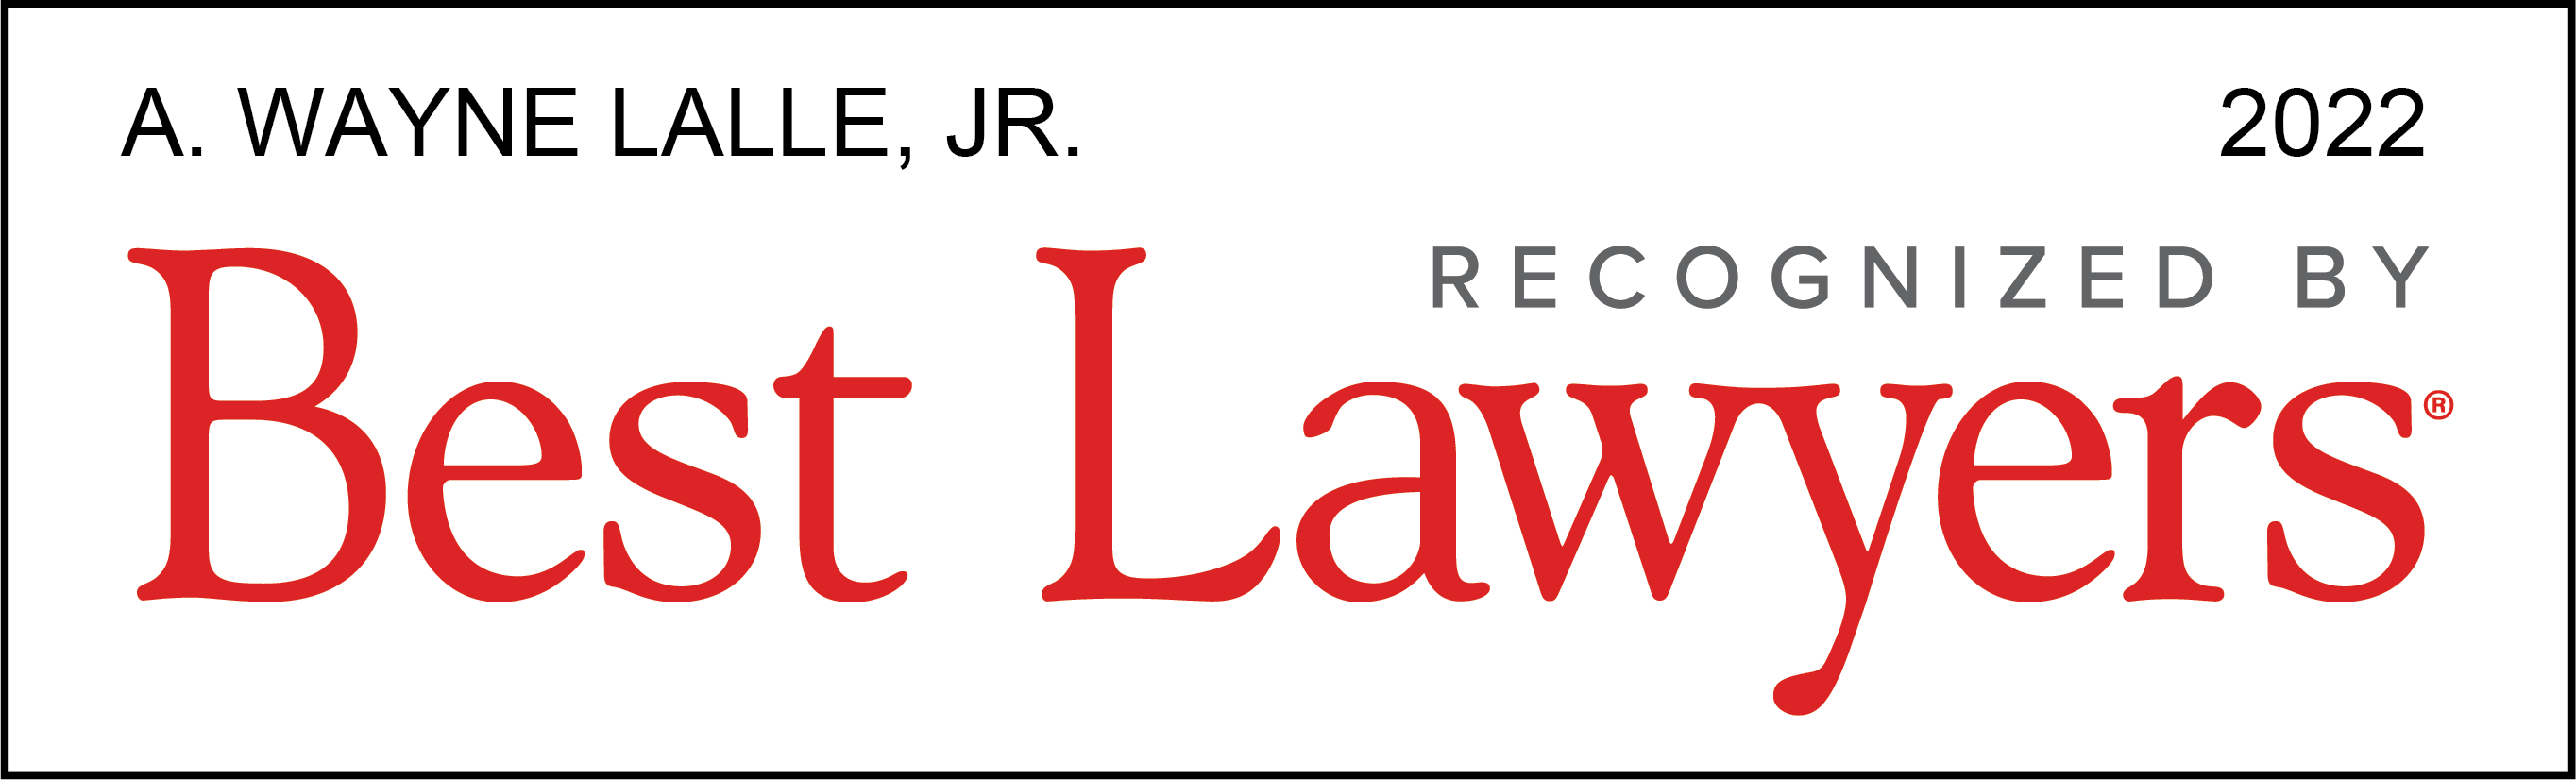 A Wayne Lalle, Jr. Best Lawyers 2022